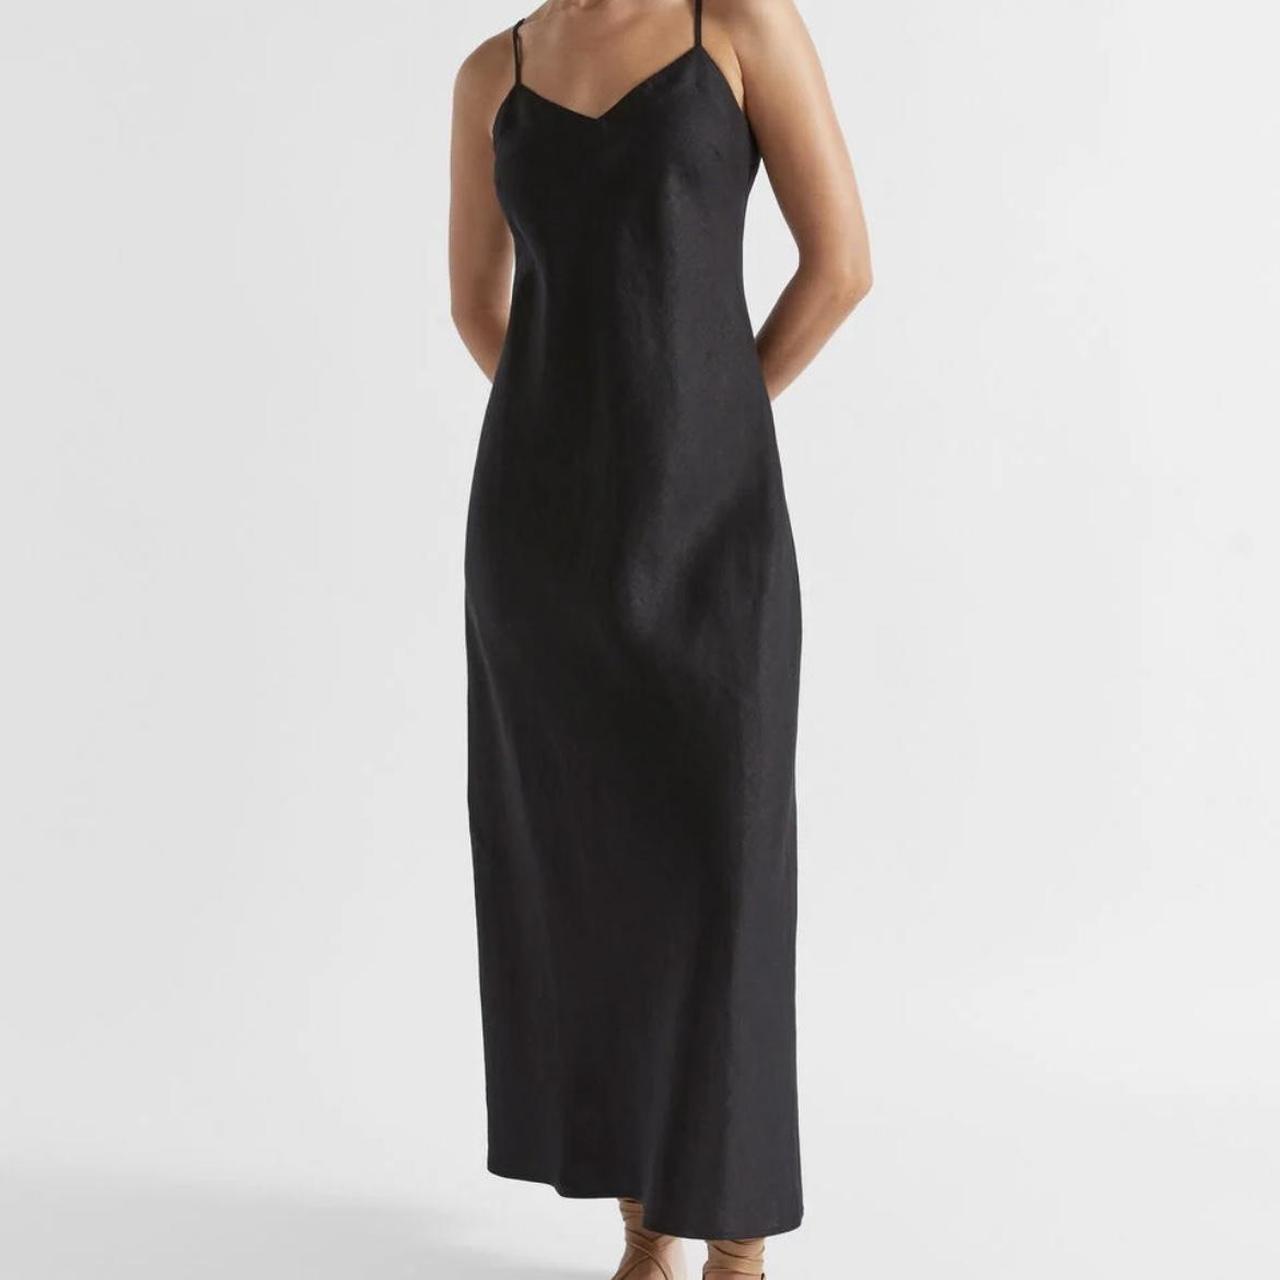 Core Linen Seed Dress Size 8 RTP:$150 Selling:... - Depop